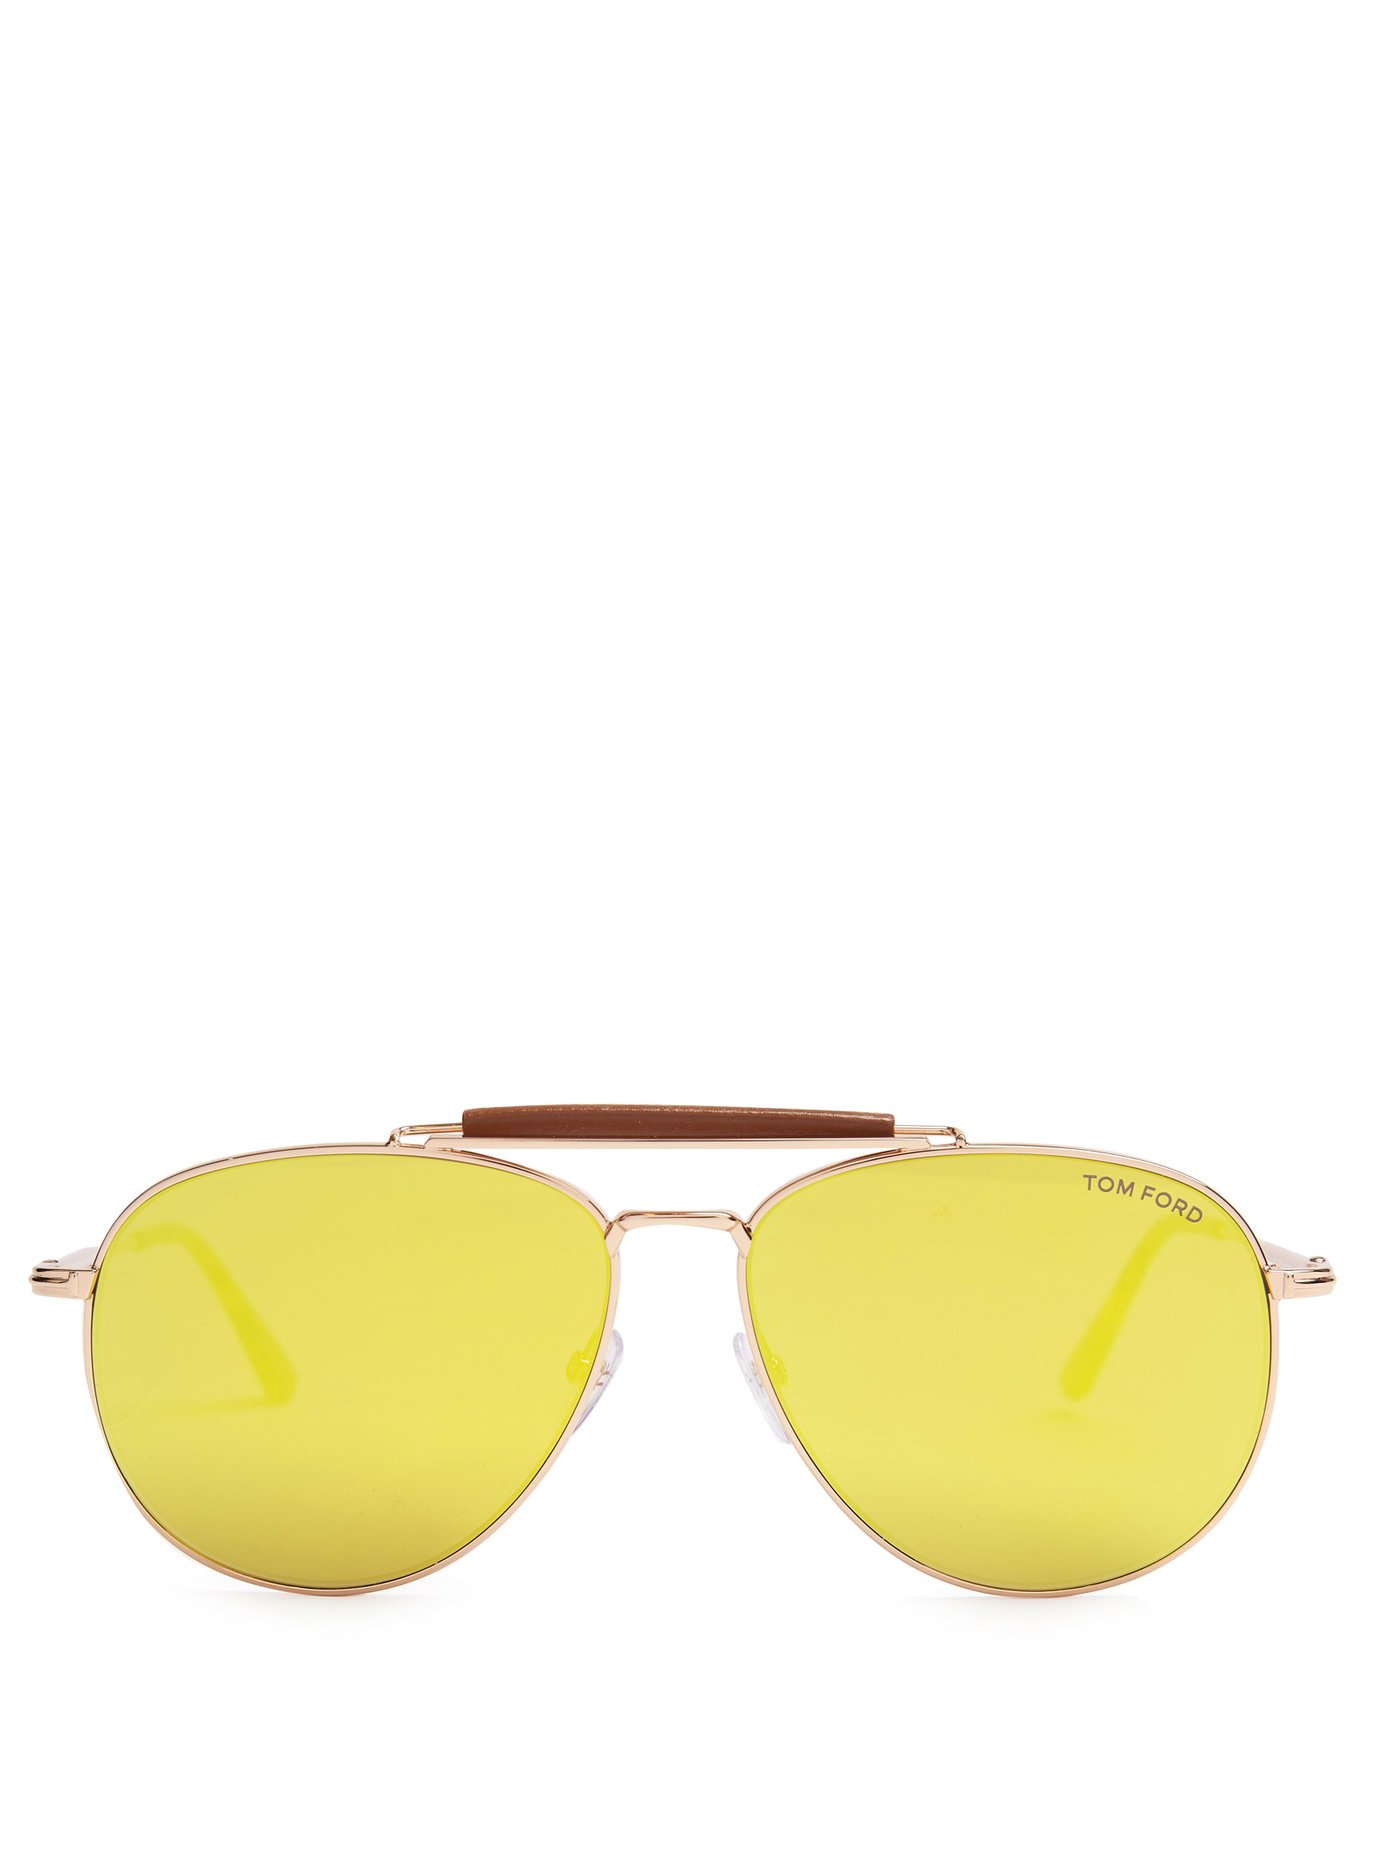 Sean Mirrored Aviator Sunglasses Tom Ford Eyewear Matchesfashion Us